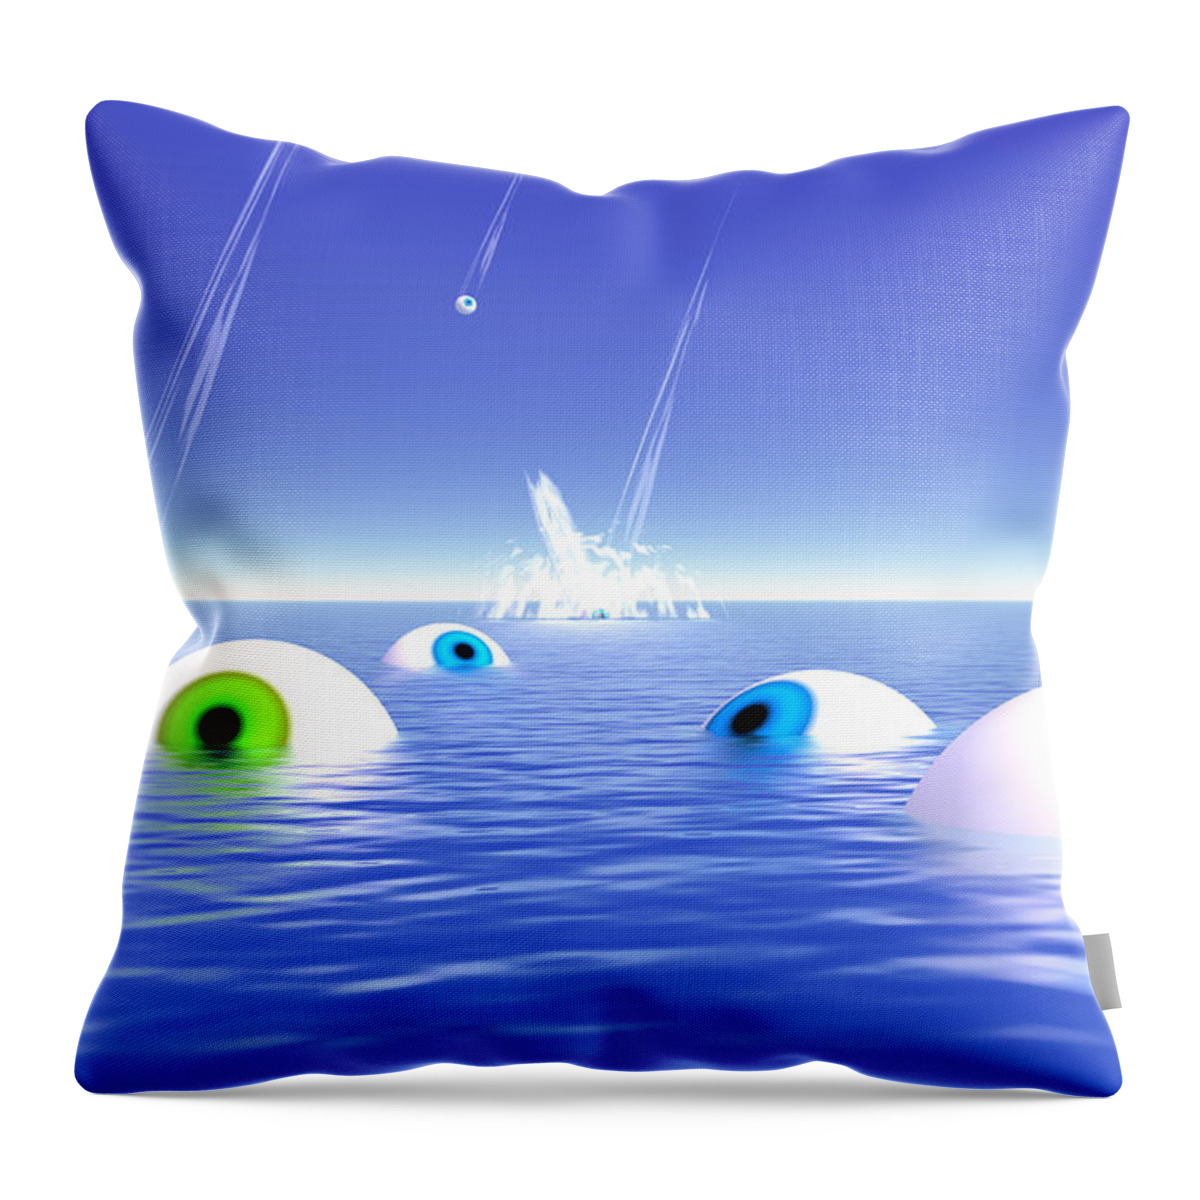 Blue Throw Pillow featuring the digital art Eye Tide by Lars Lentz